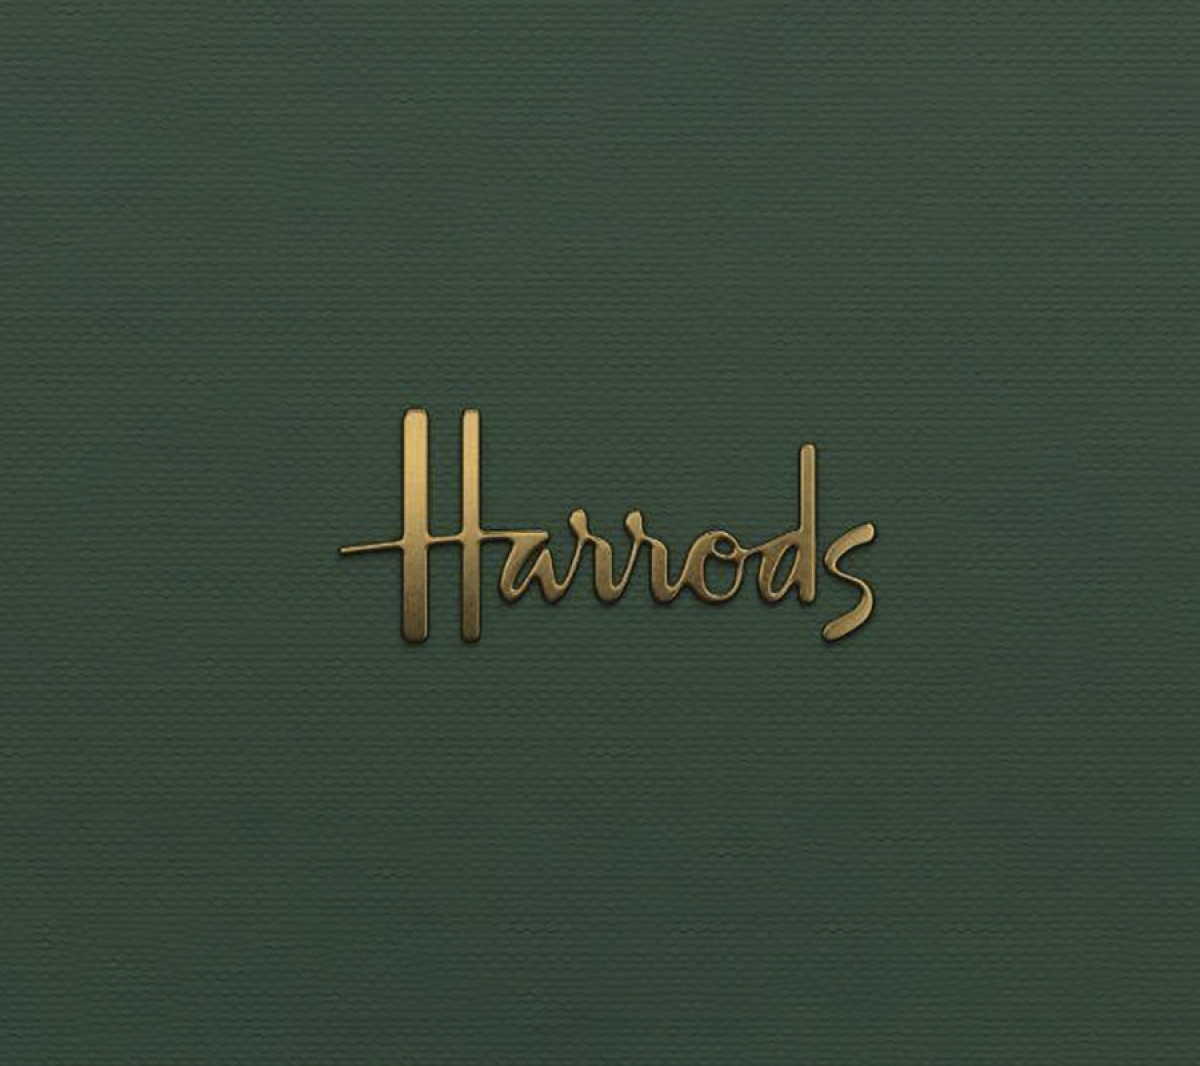 Harrods-case-study-logo-advent-calendars